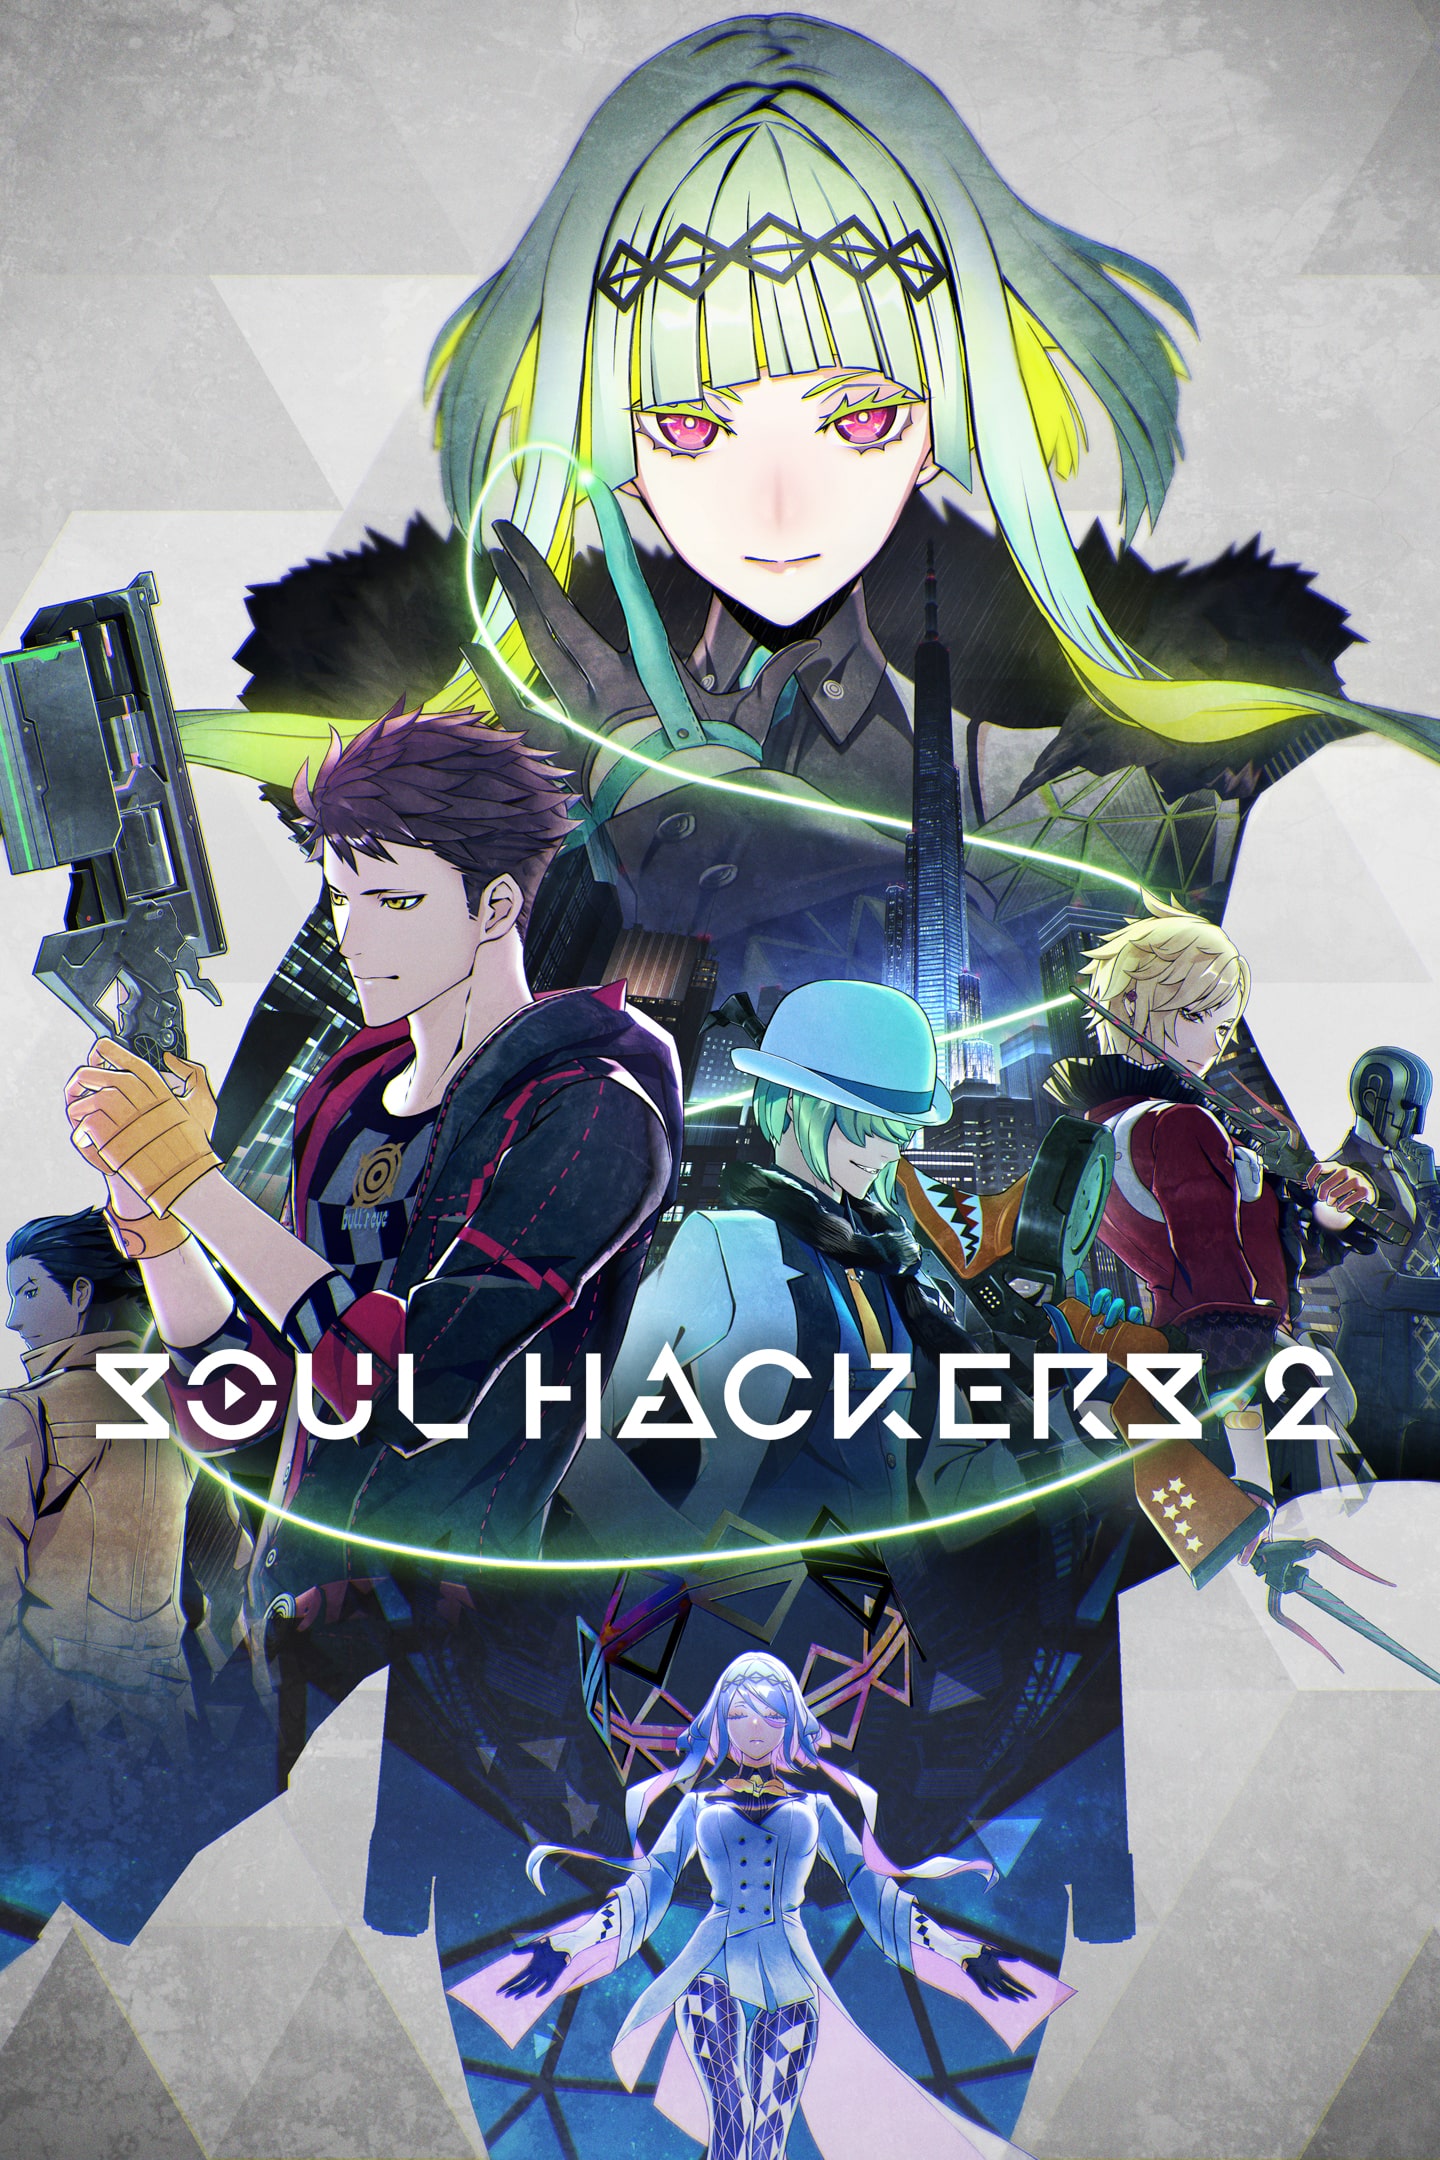 Soul Hackers 2 (Shin Megami Tensei: Devil Summoner) - PS4 Santo António dos  Olivais • OLX Portugal